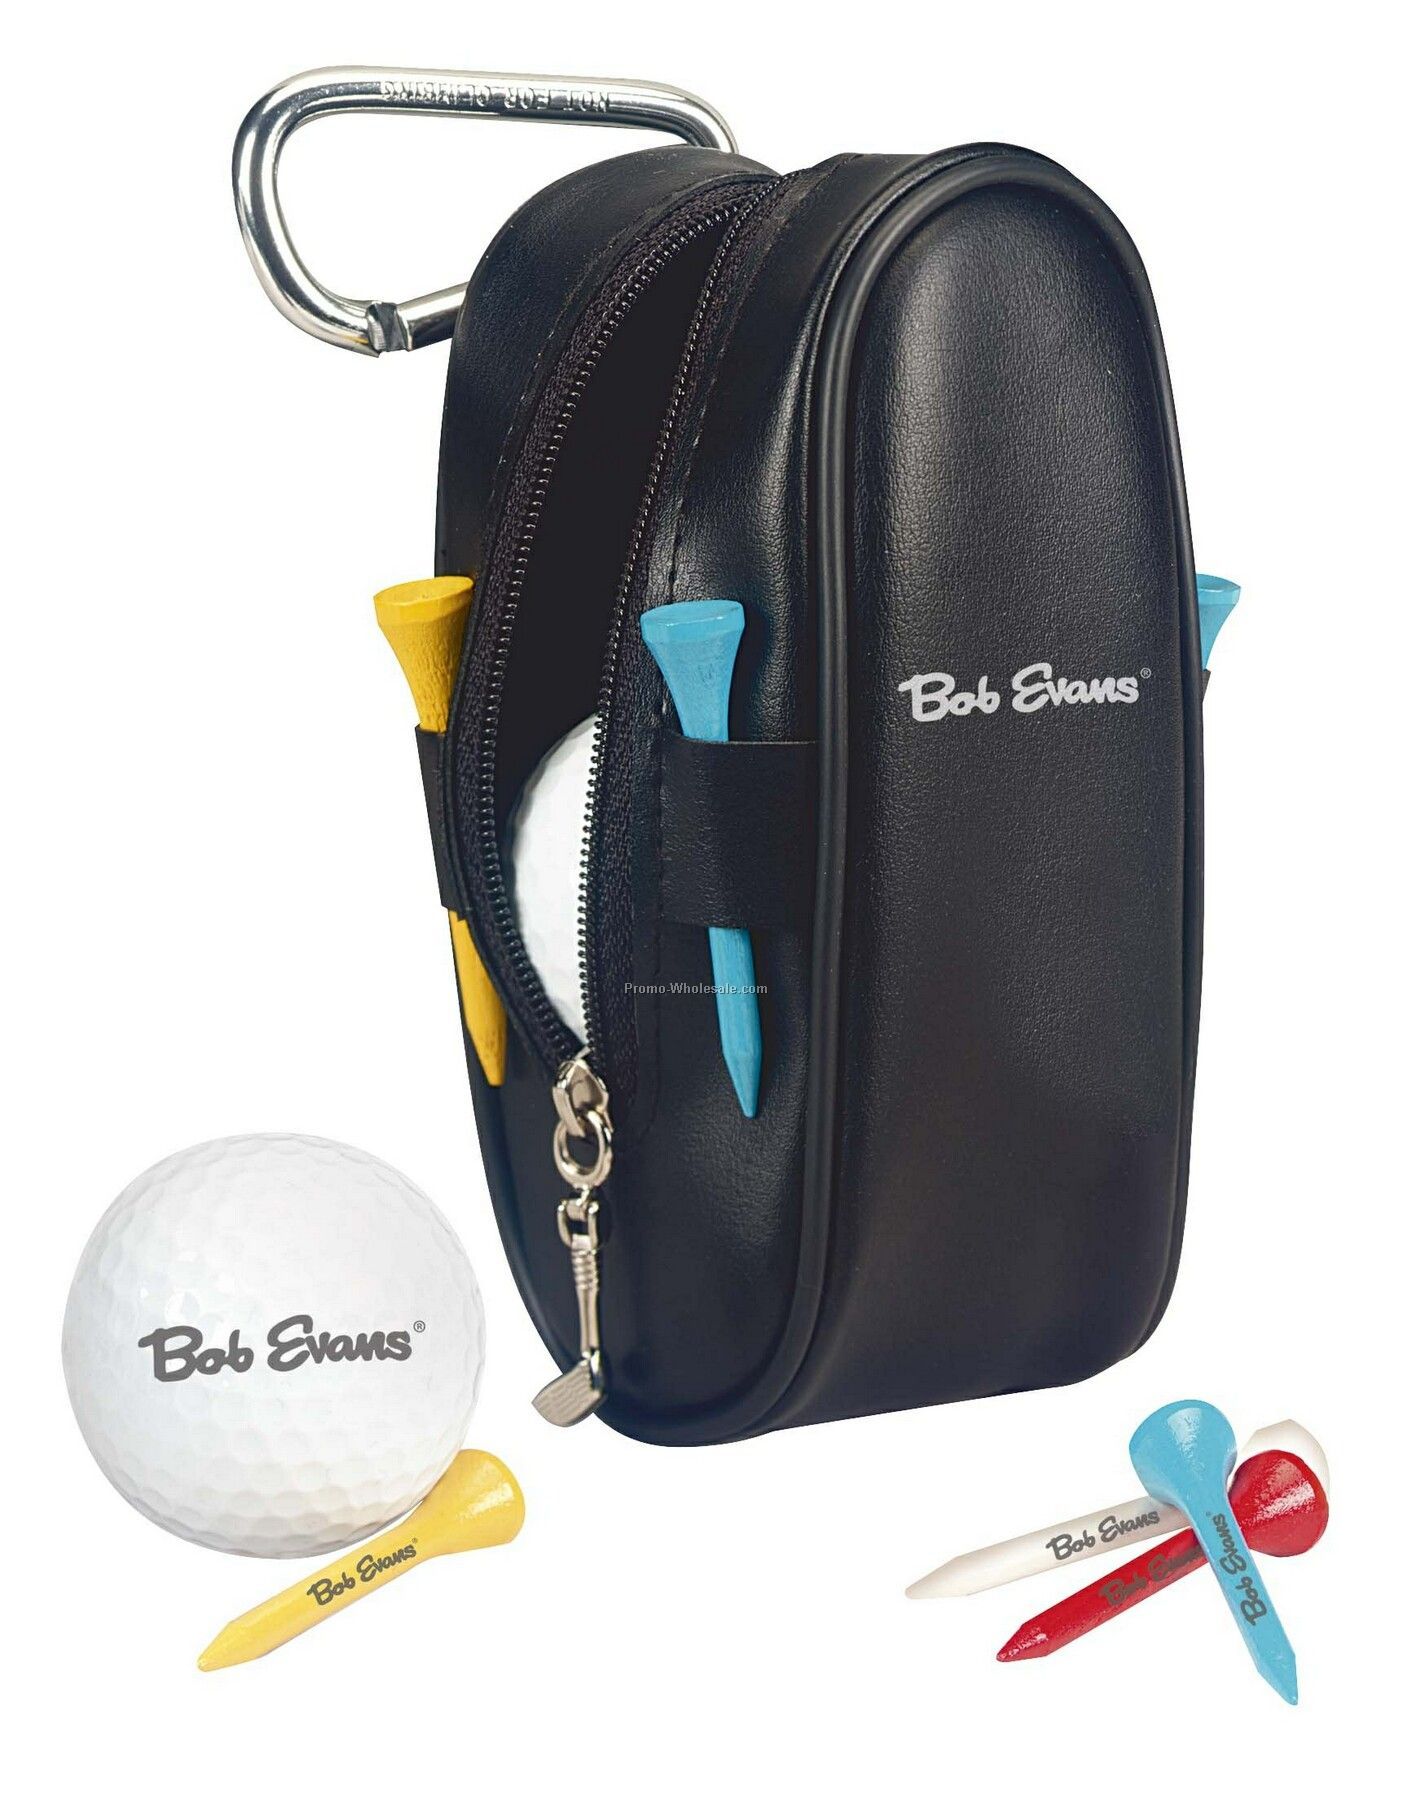 Tee Off 3 Ball Caddie With Top Flite Xl Distance Golf Balls & 4 Tees